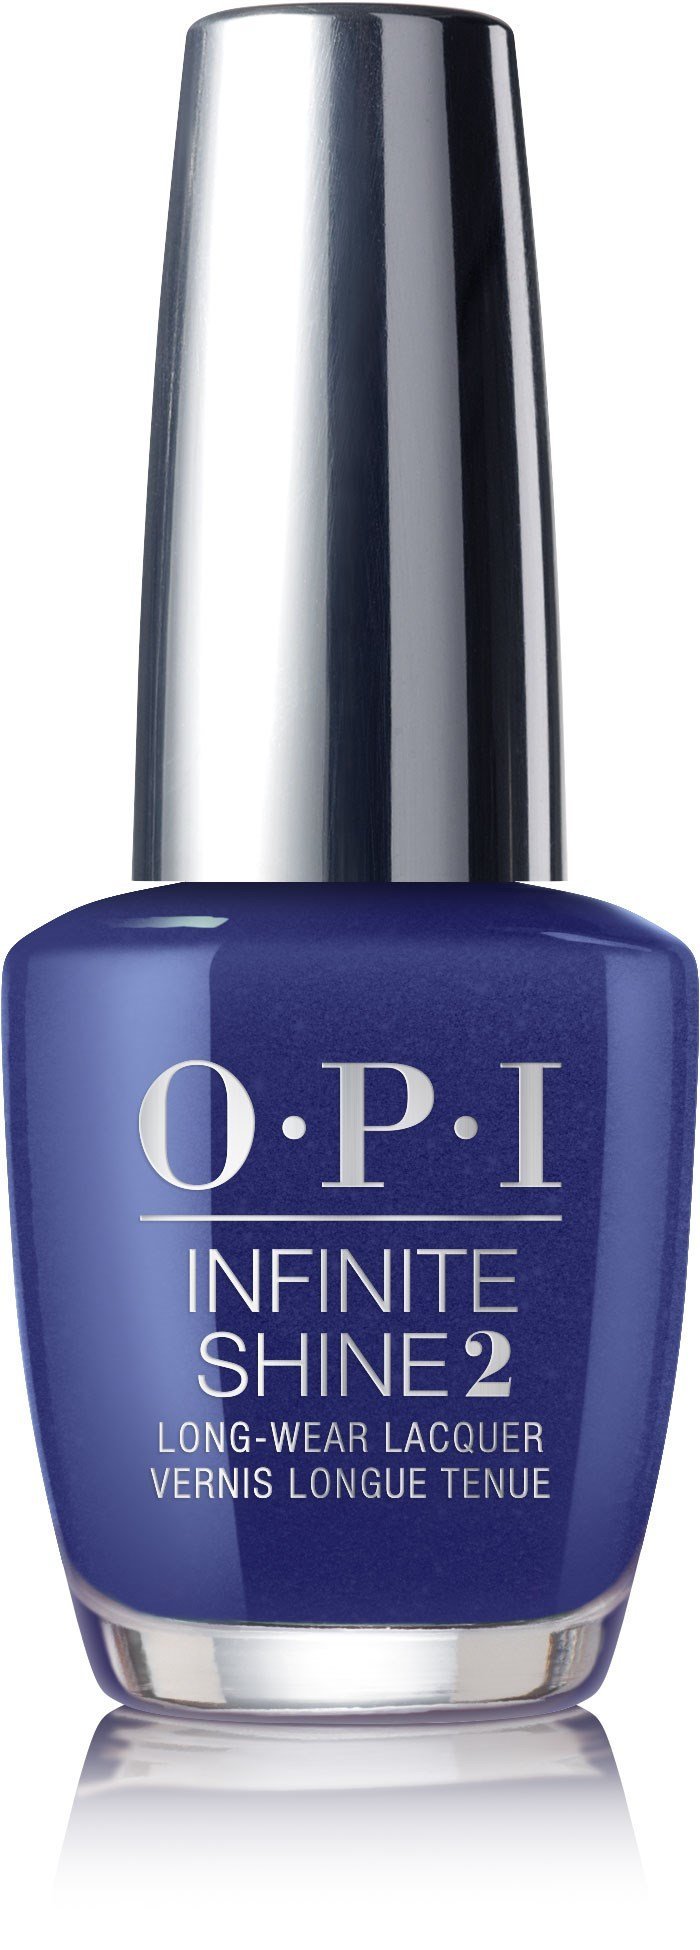 OPI Infinite Shine - Turn On the Northern Lights!